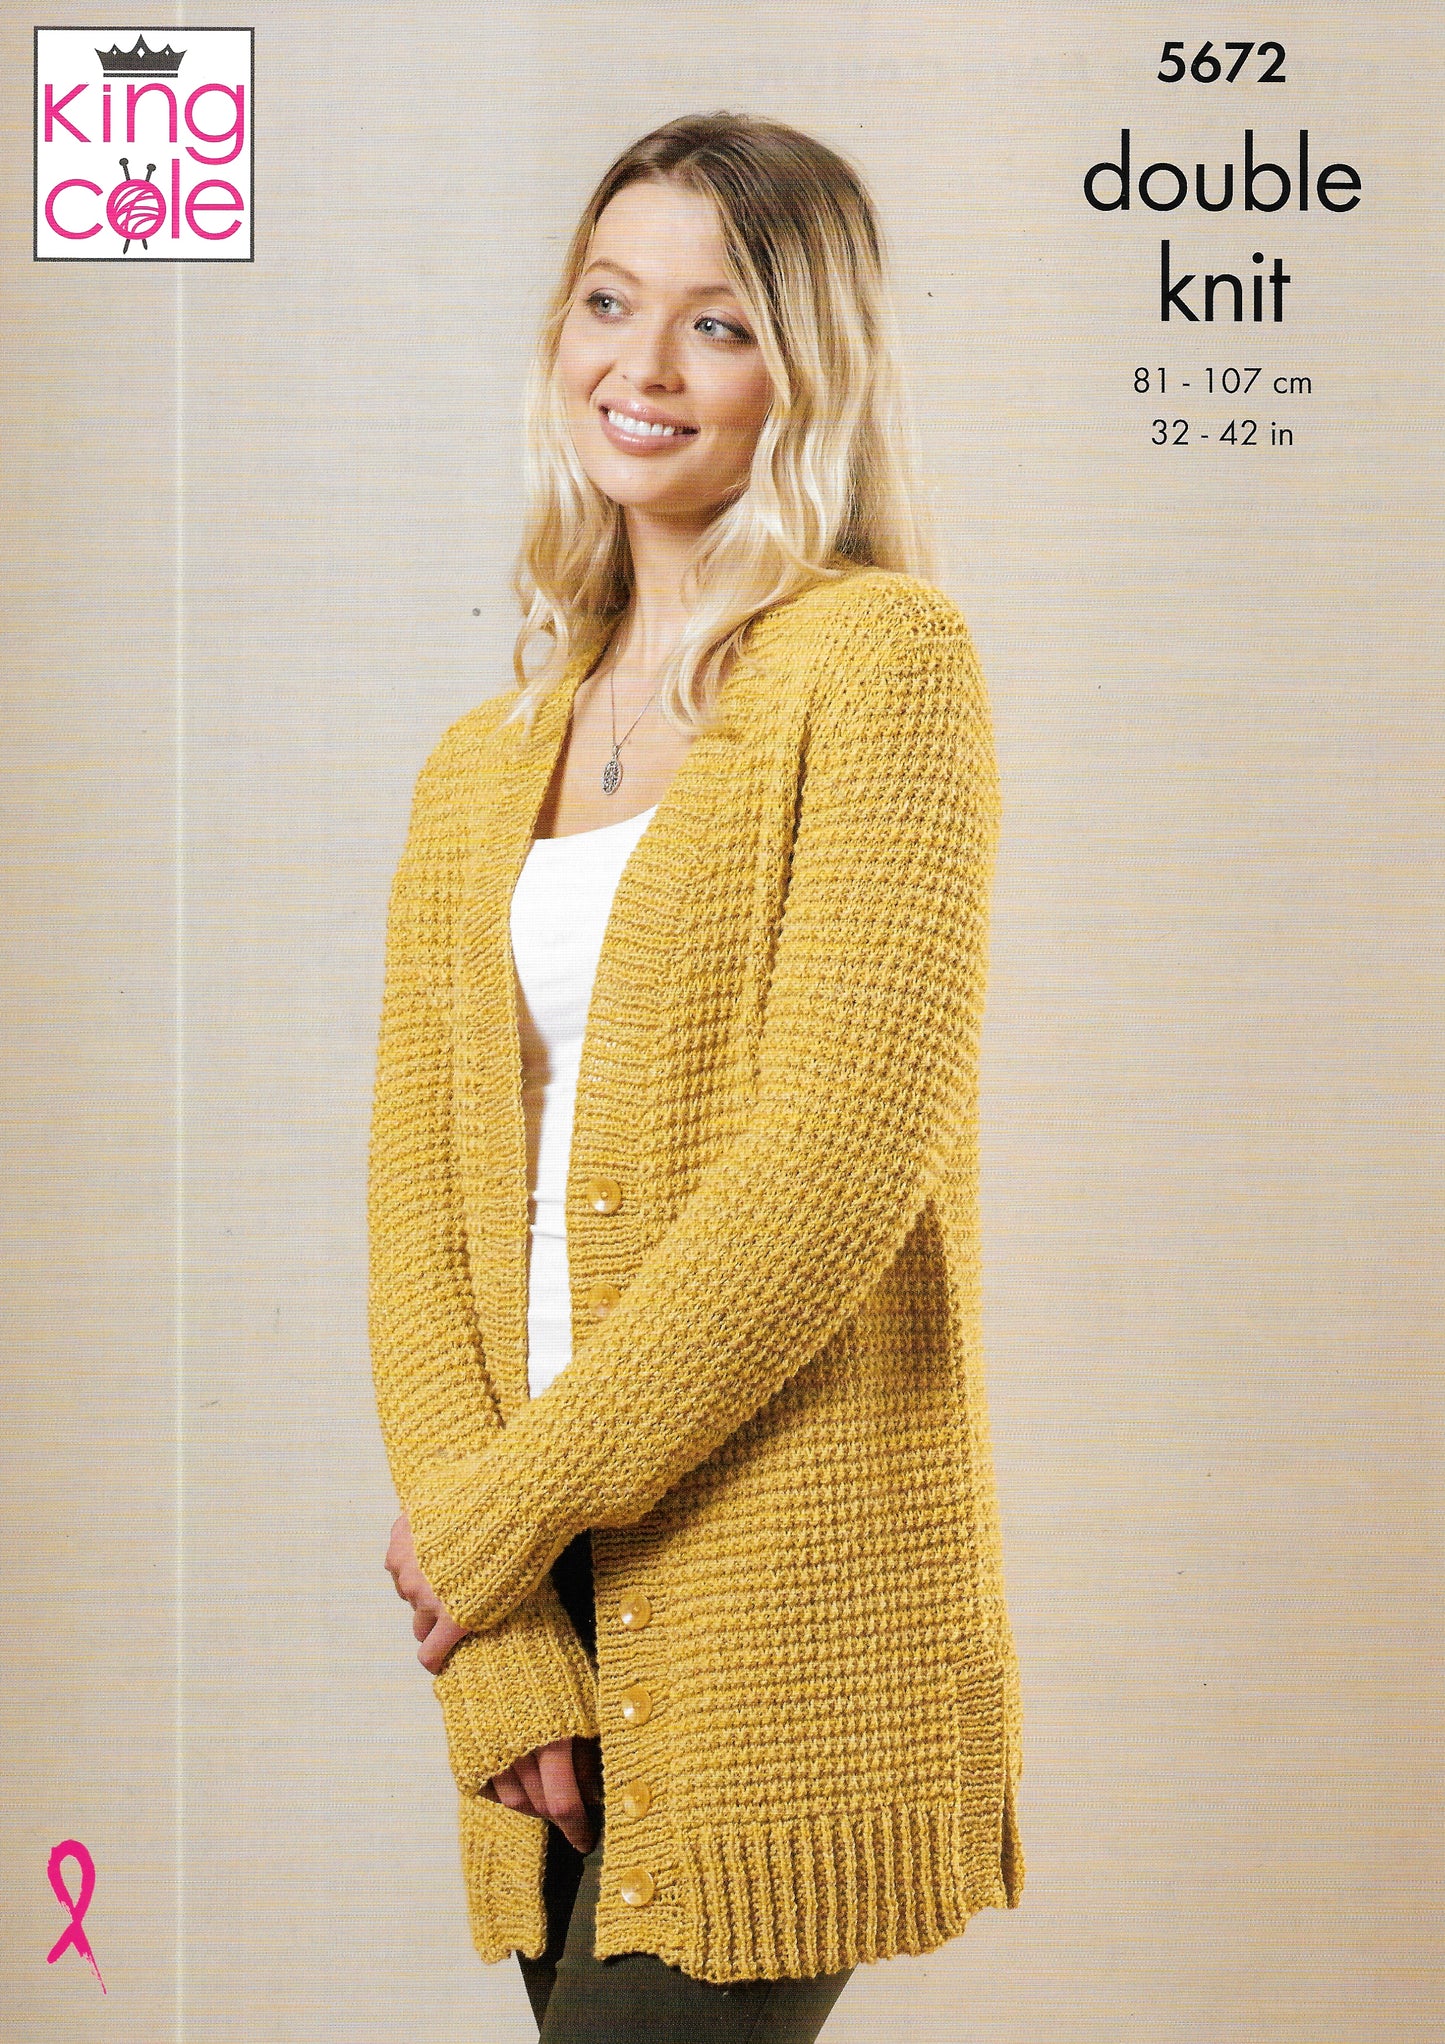 5672 King Cole Knitting Pattern. Lady's cardigan/sweater. Double knitting yarn.